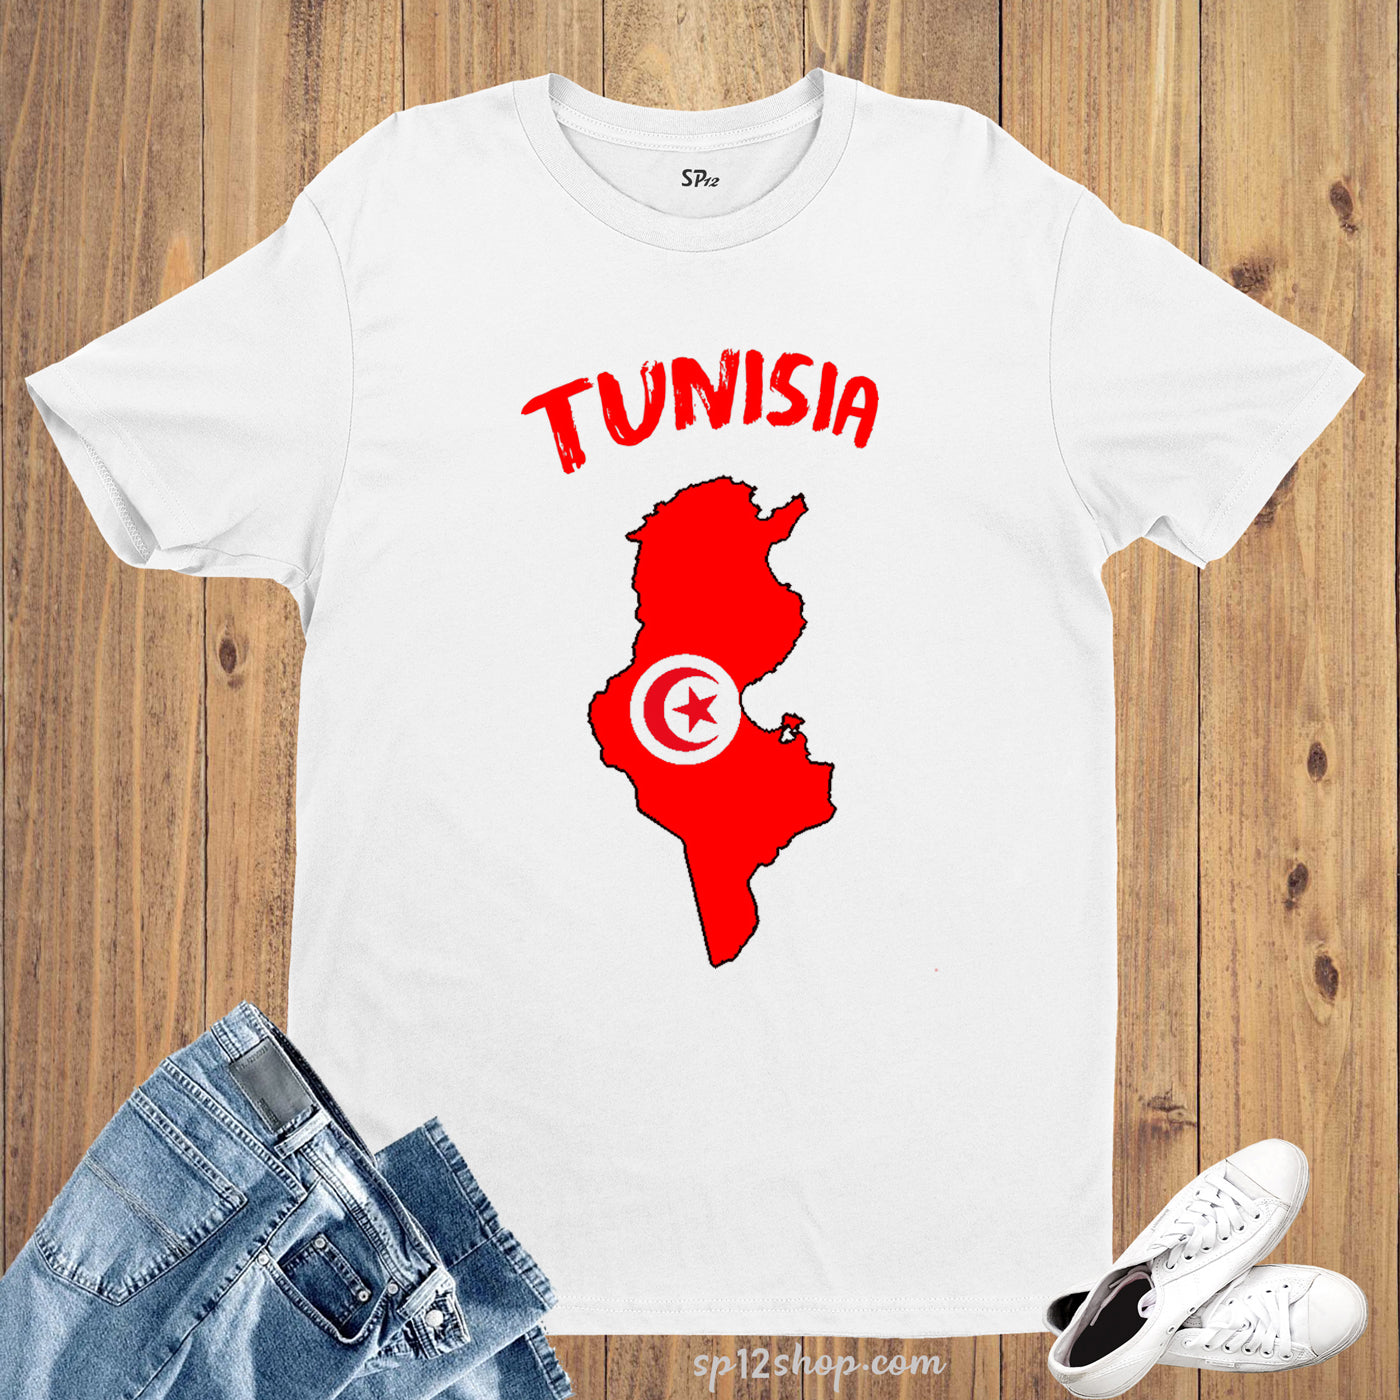 Tunisia Flag T Shirt Olympics FIFA World Cup Country Flag Tee Shirt